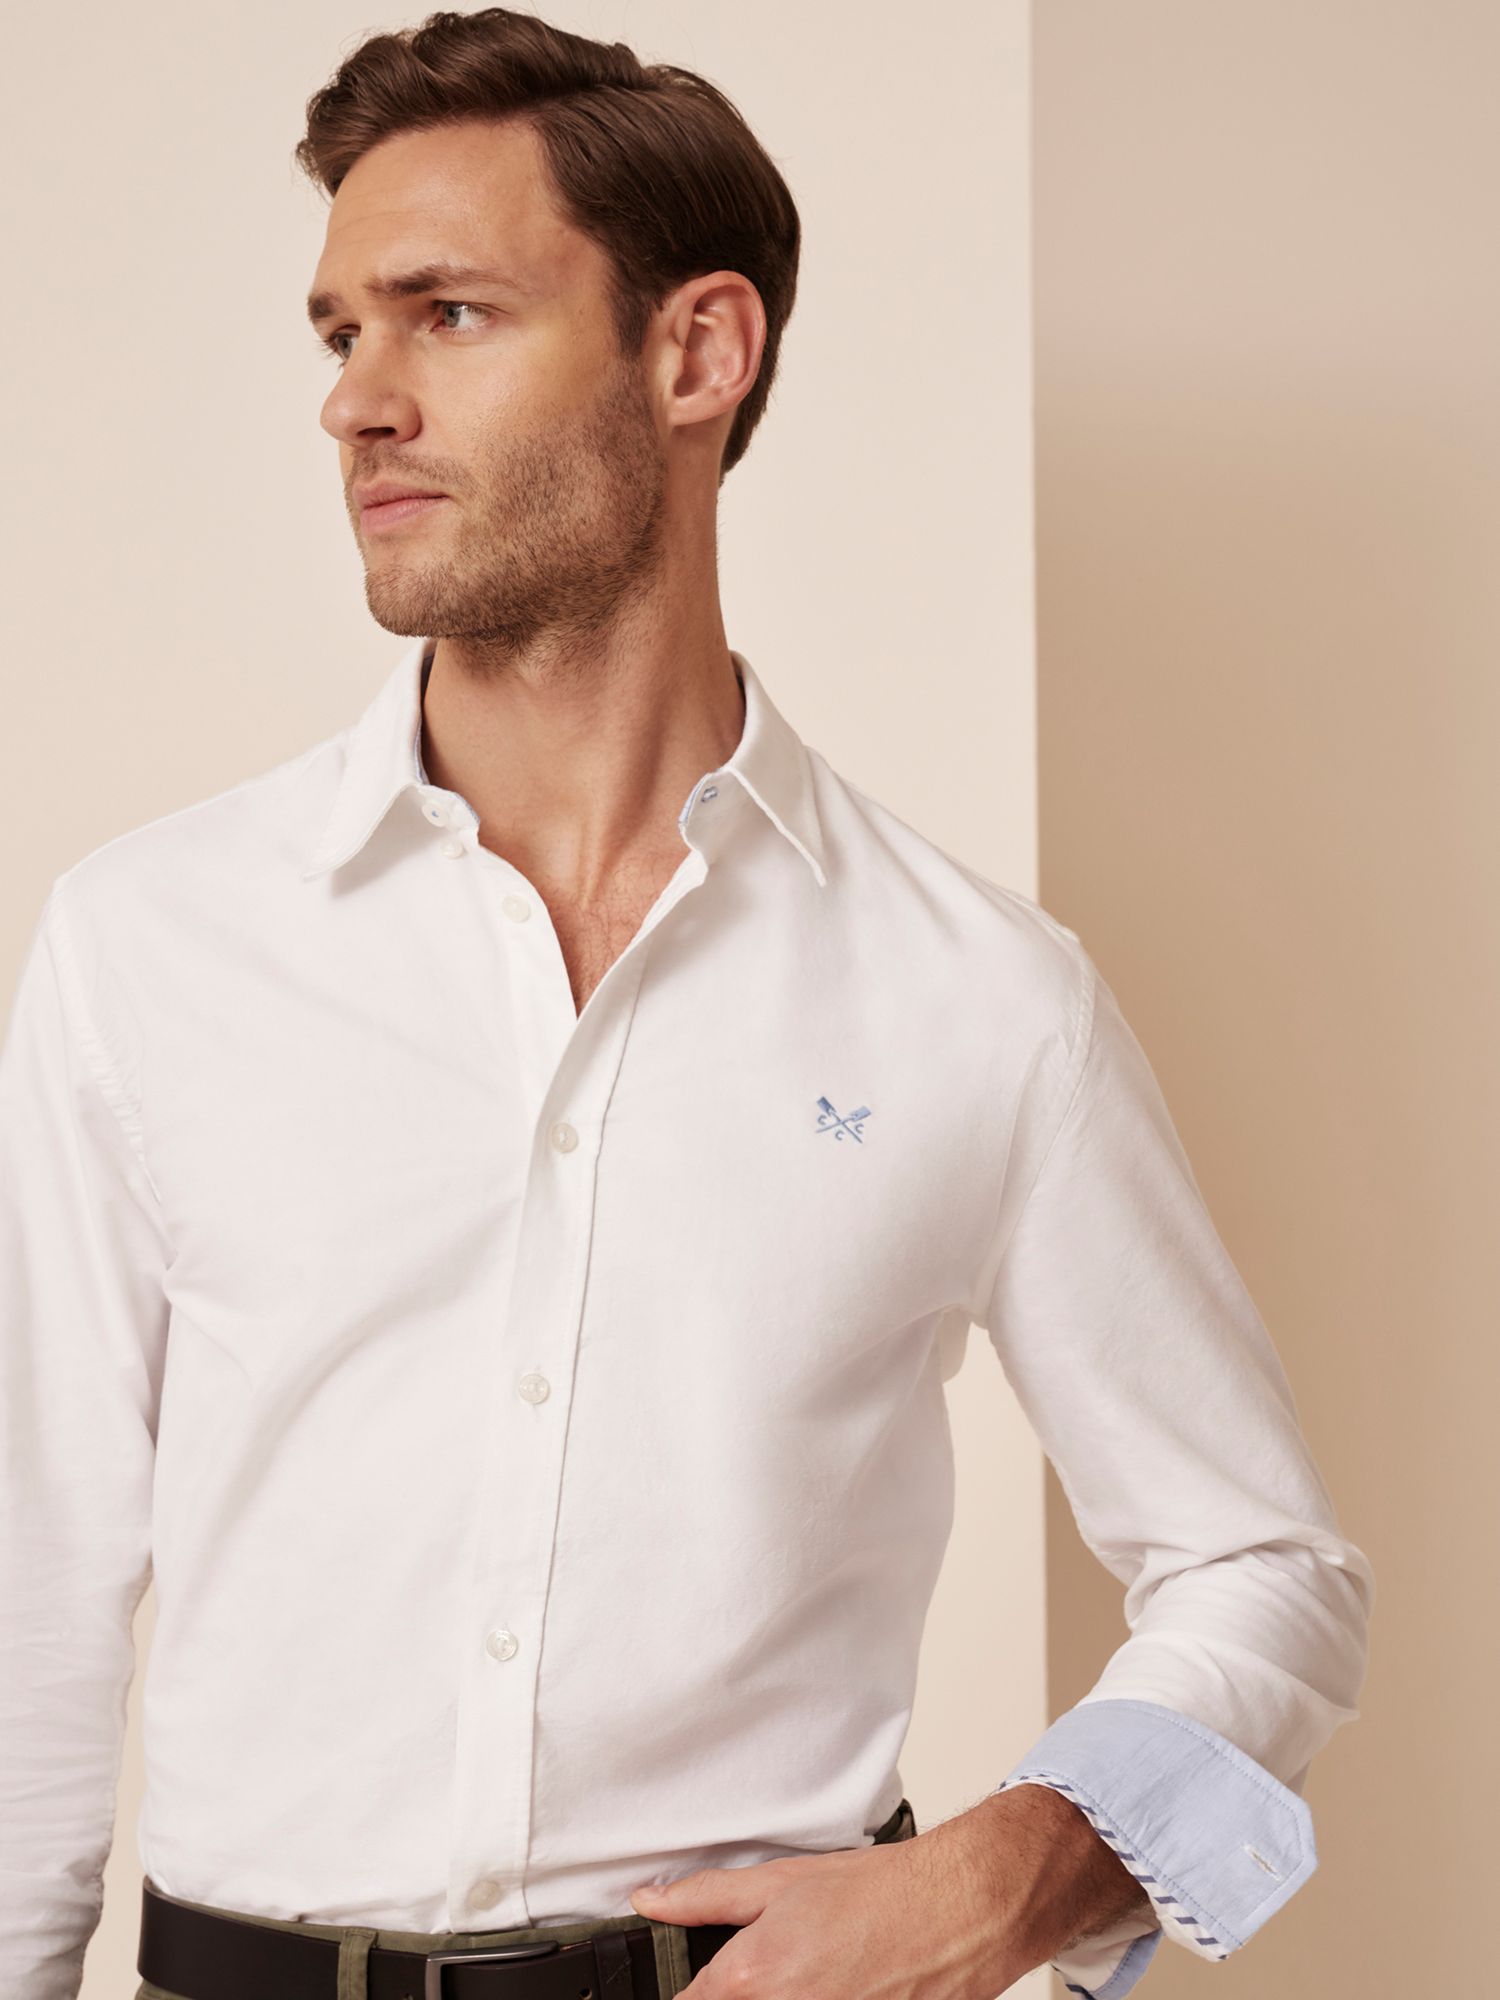 Crew Clothing Slim Fit Oxford Shirt, Bright White, S